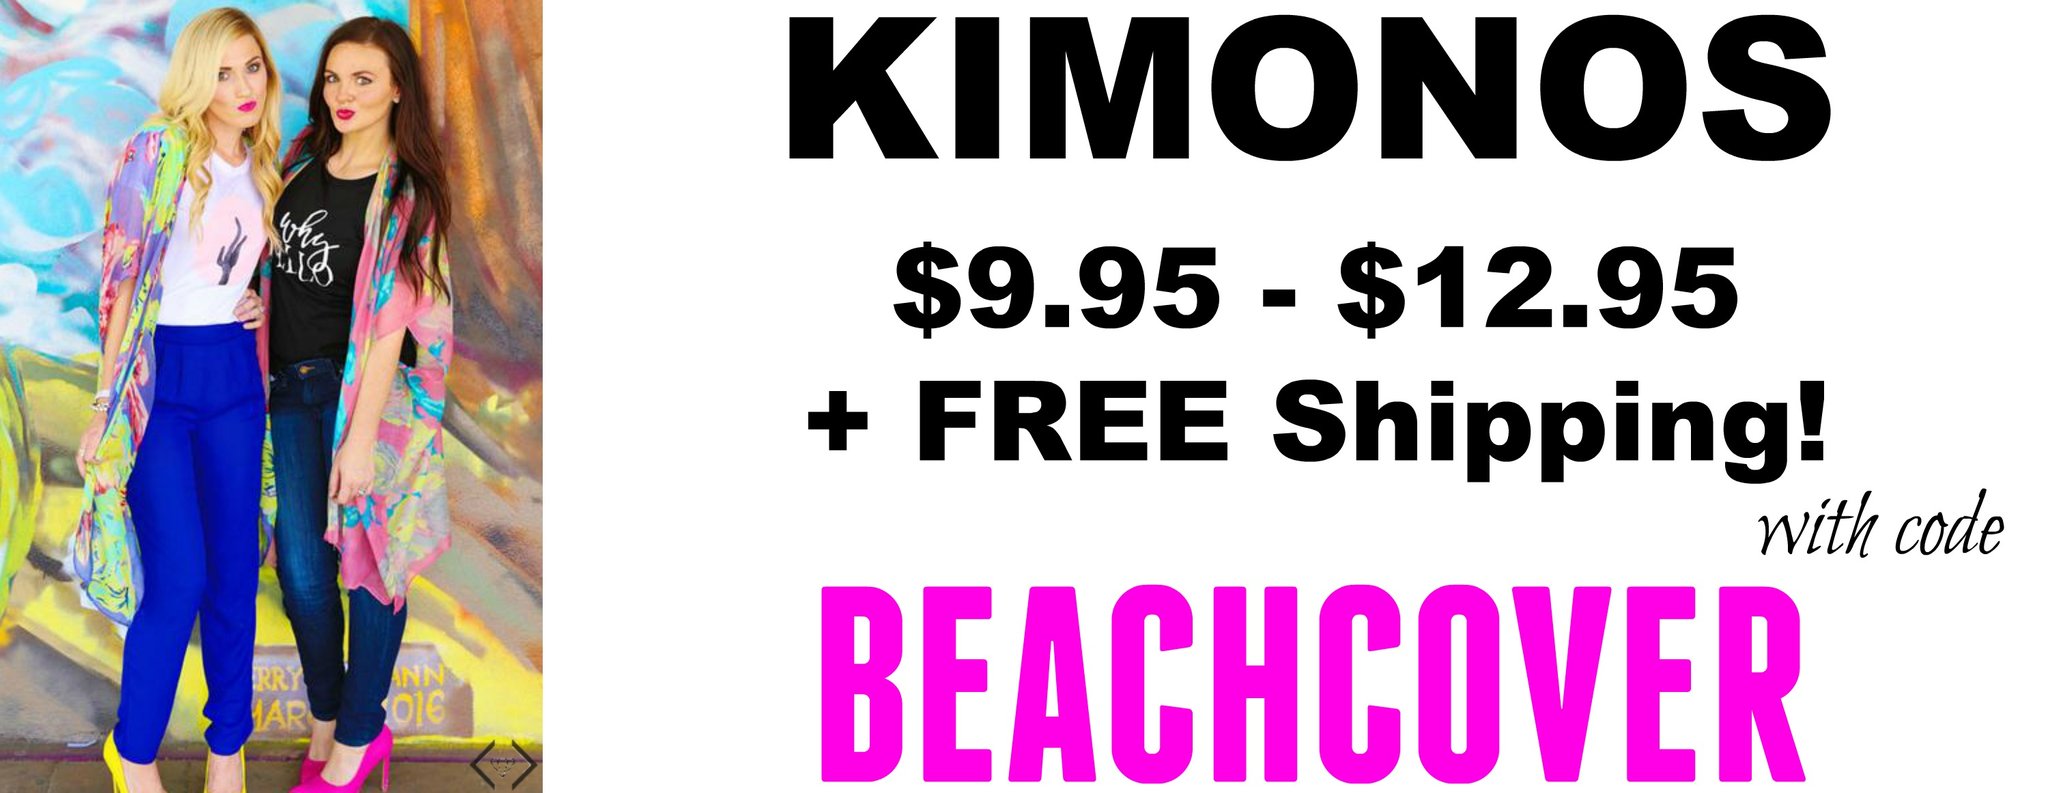 Lightweight Kimonos From $9.95 + FREE Shipping!